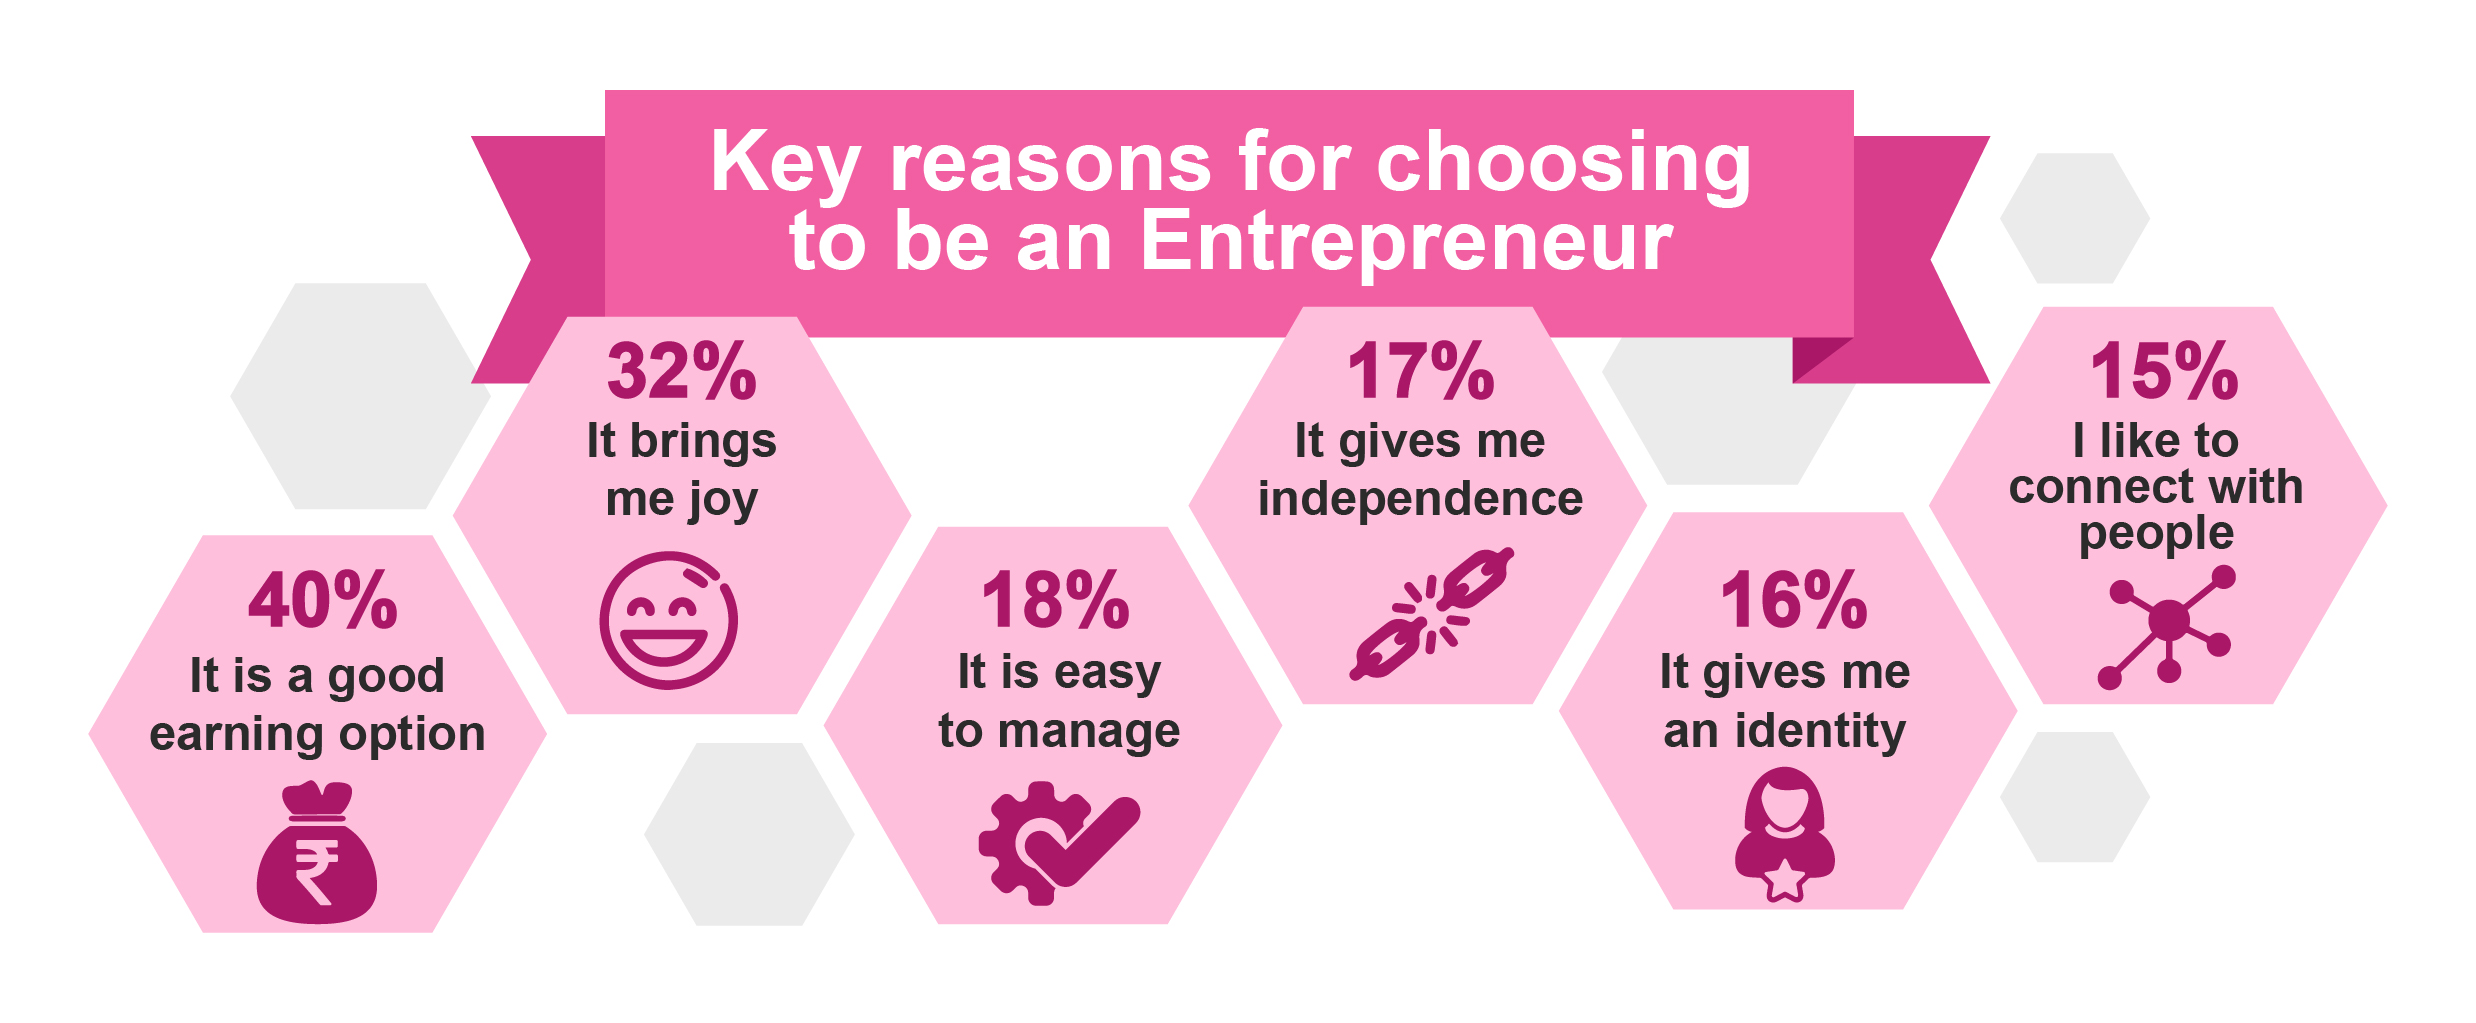 40-women-prefer-entrepreneurship-as-a-career-and-earning-option-highlights-meesho-survey